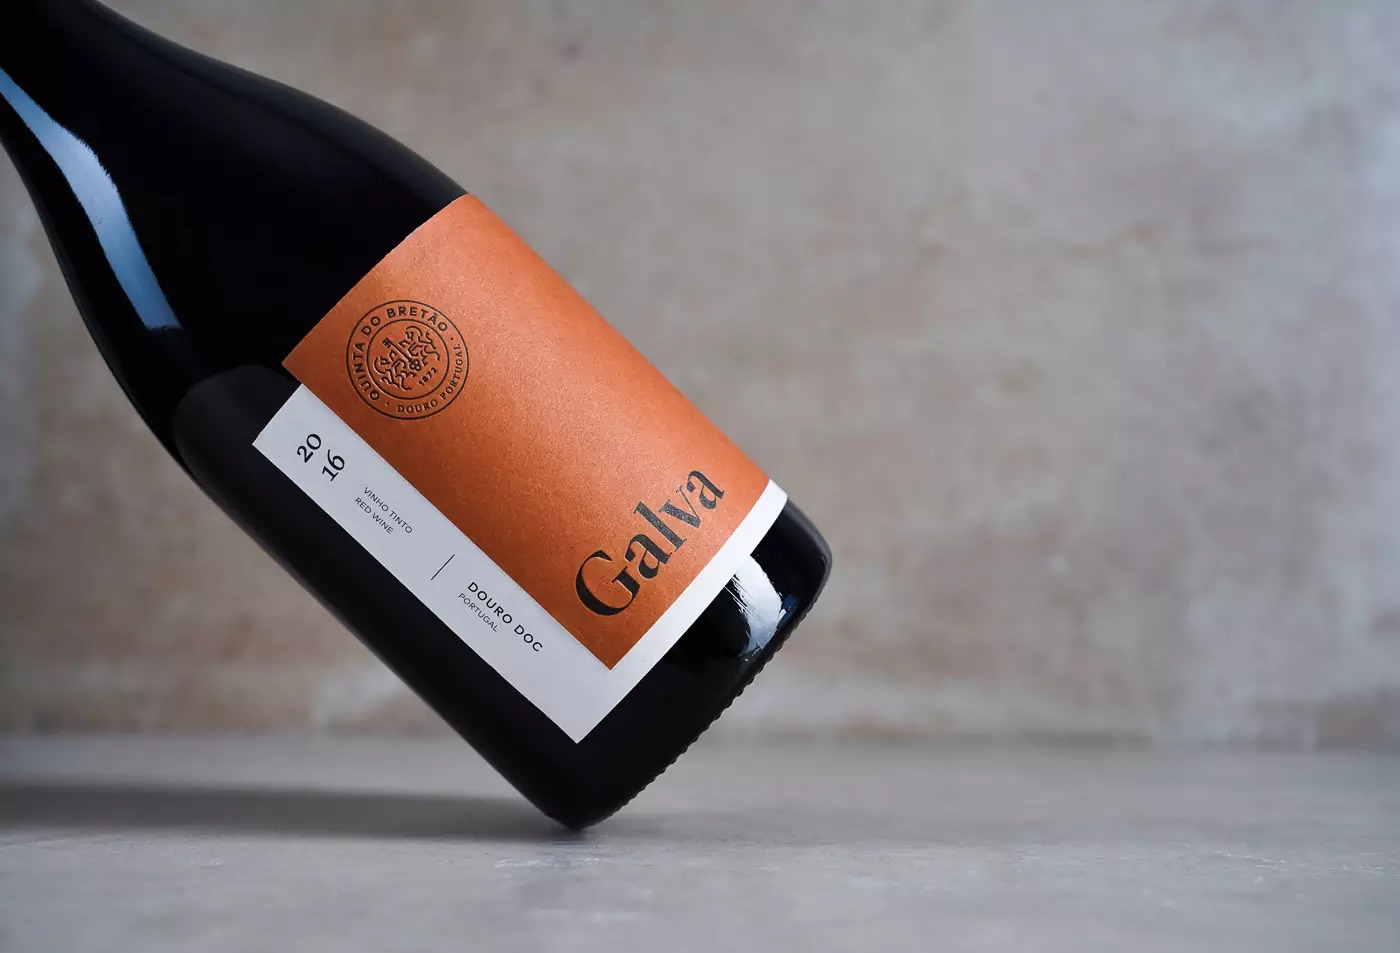 Galva葡萄酒品牌产品包装设计，葡萄酒创意包装作品欣赏。